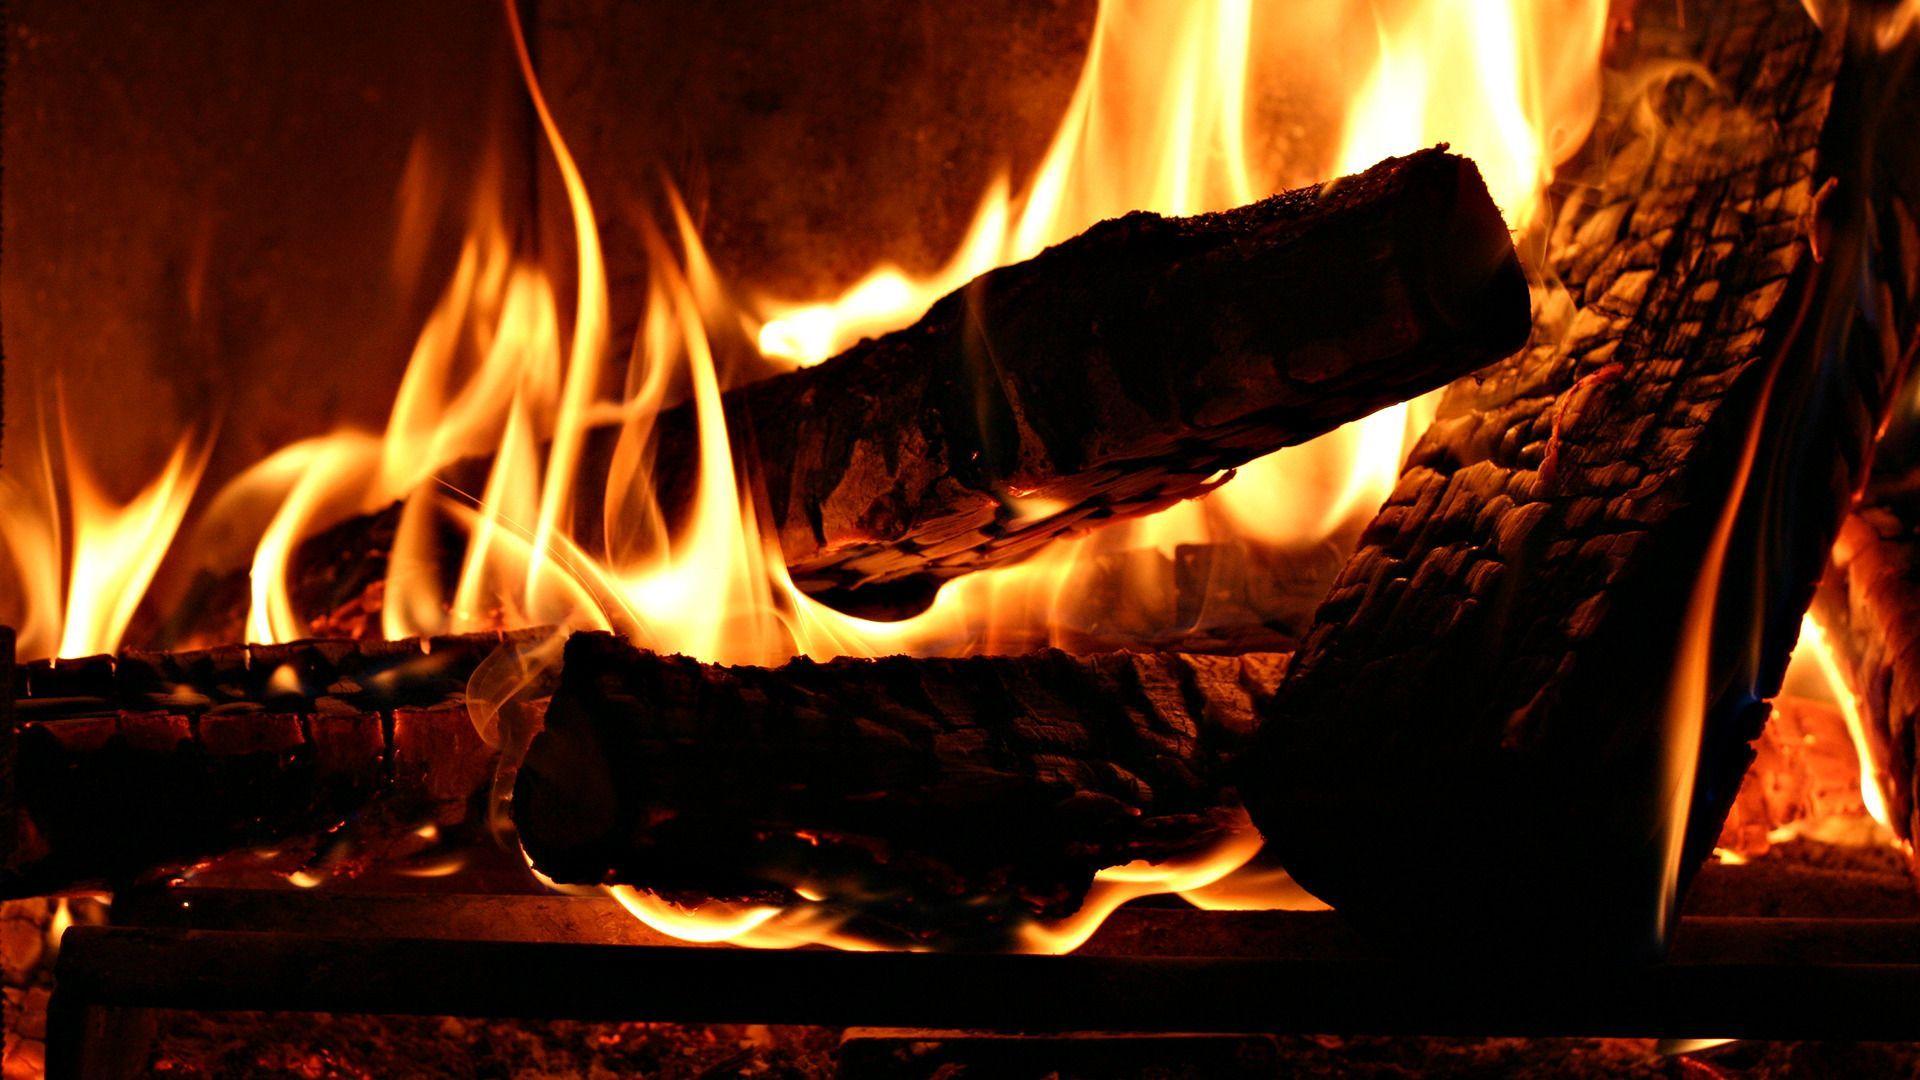 Fireplace Wallpaper 24632 1920x1080 px. Fireplace, Log wallpaper, Image house